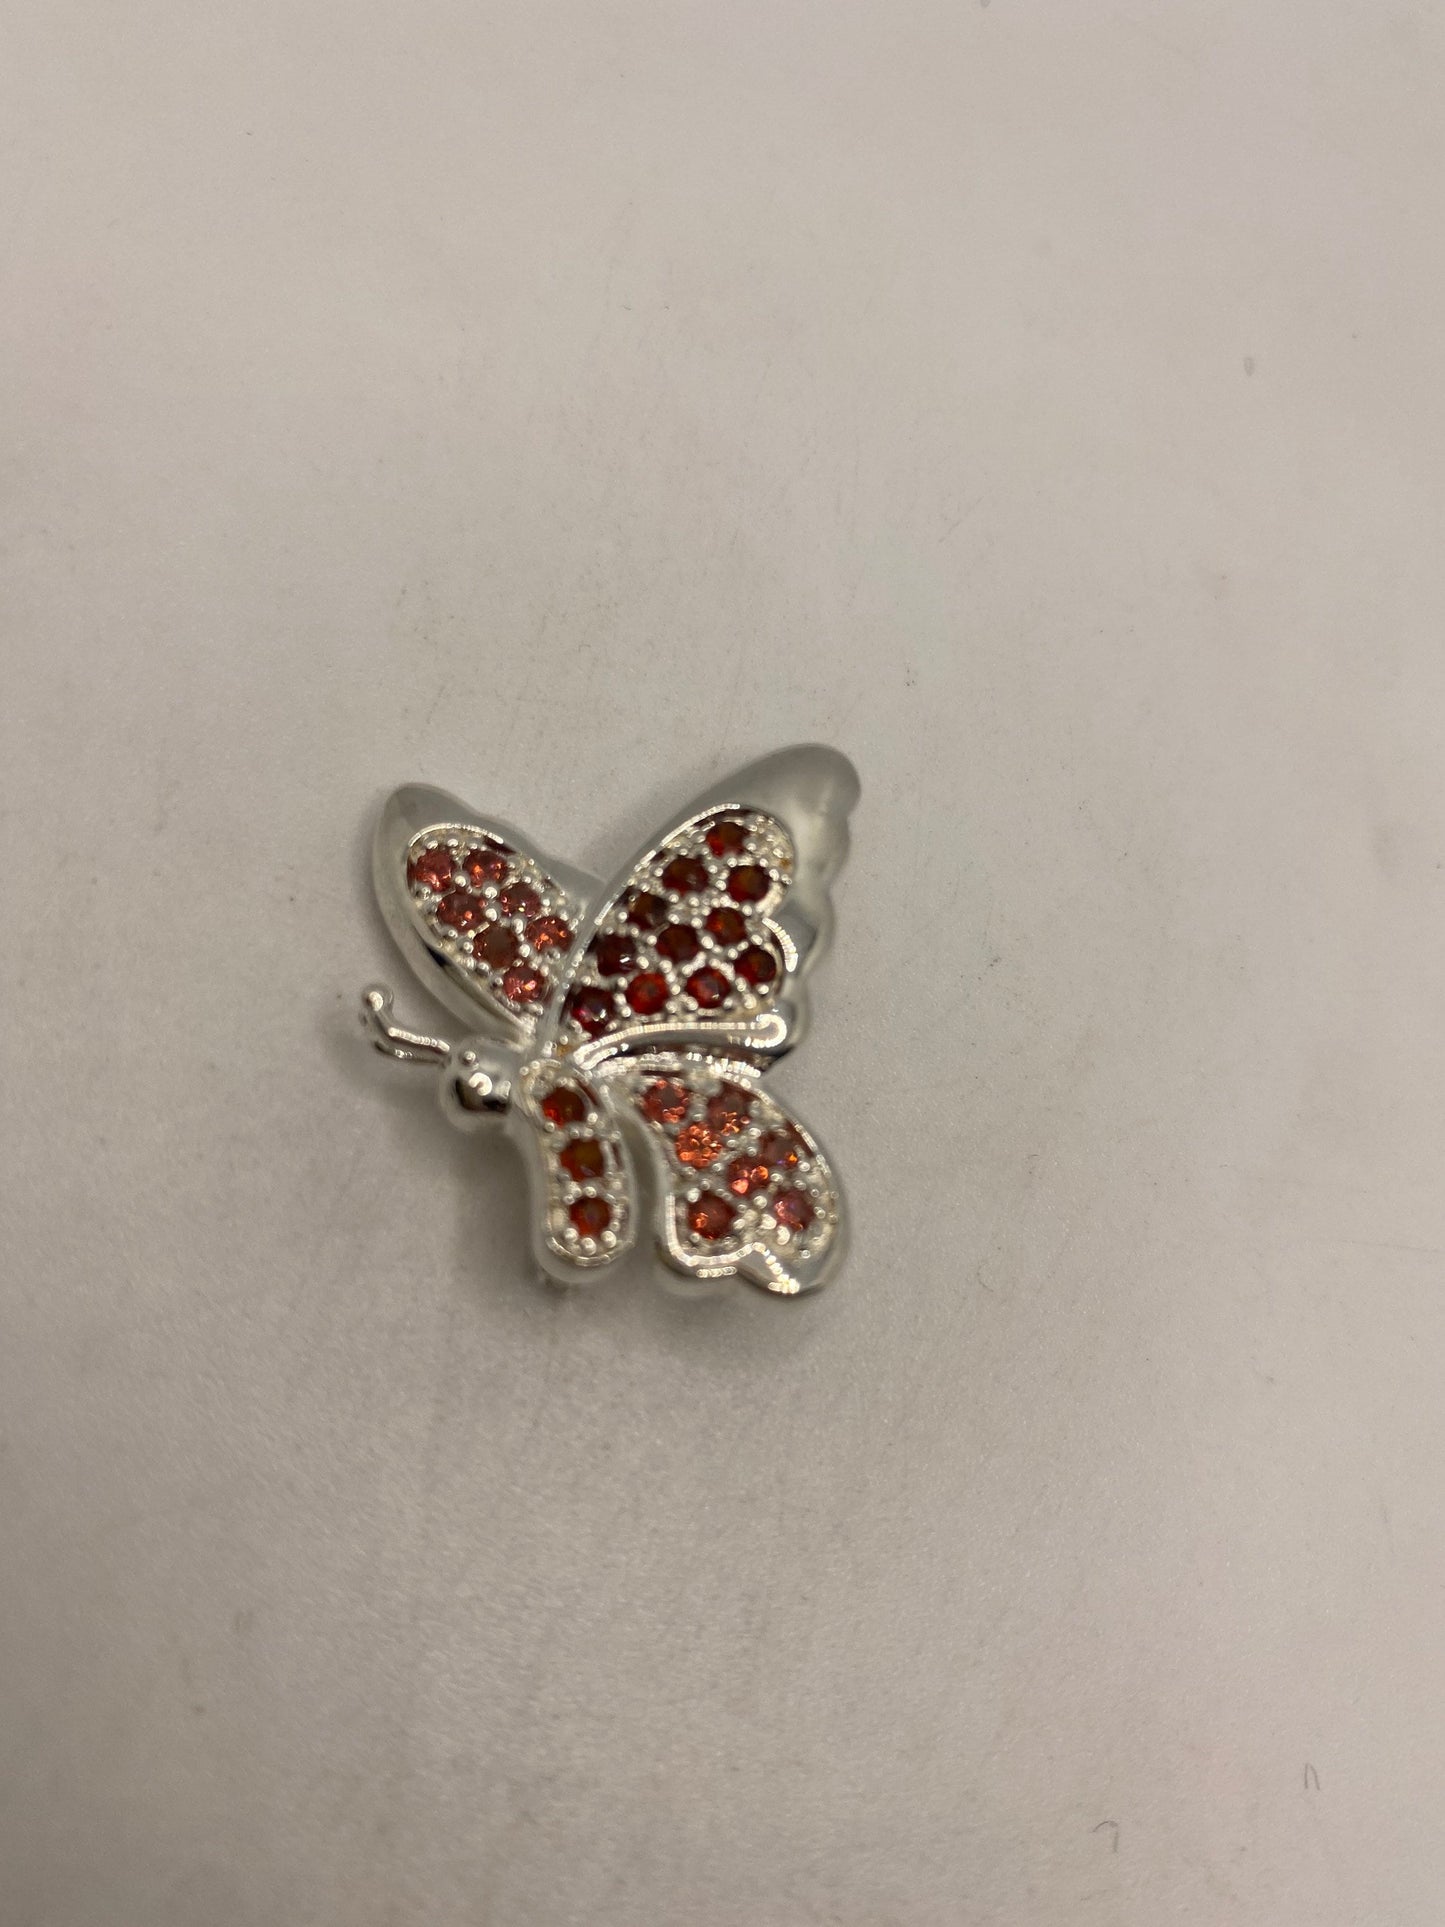 Vintage Red Garnet Pin 925 Sterling Silver Butterfly Brooch